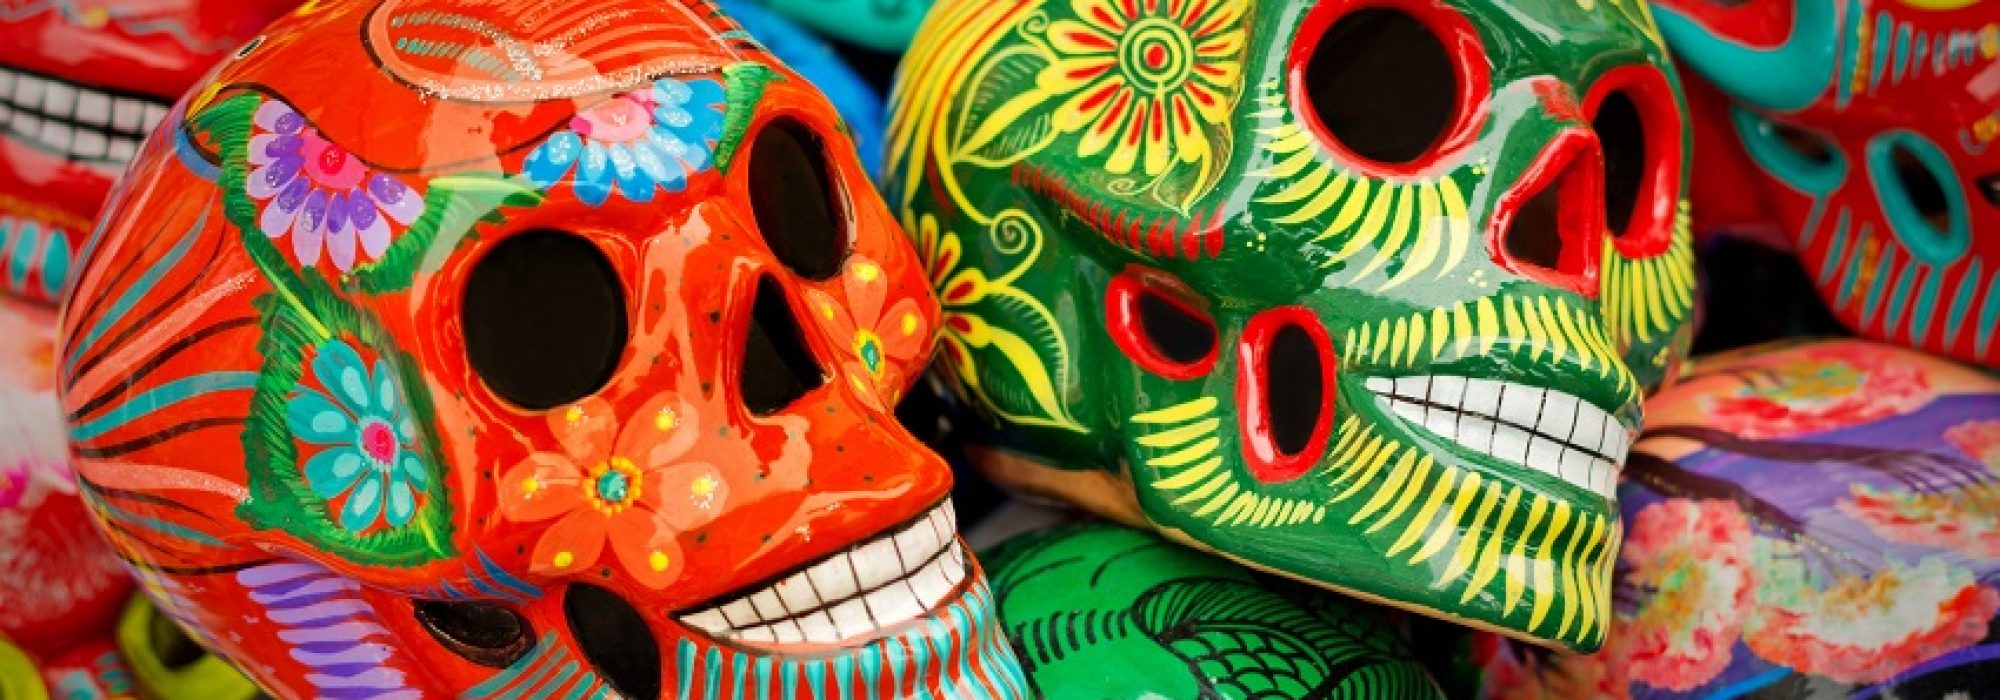 Decorated colorful skulls, ceramics death symbol at market, day of dead, Mexico